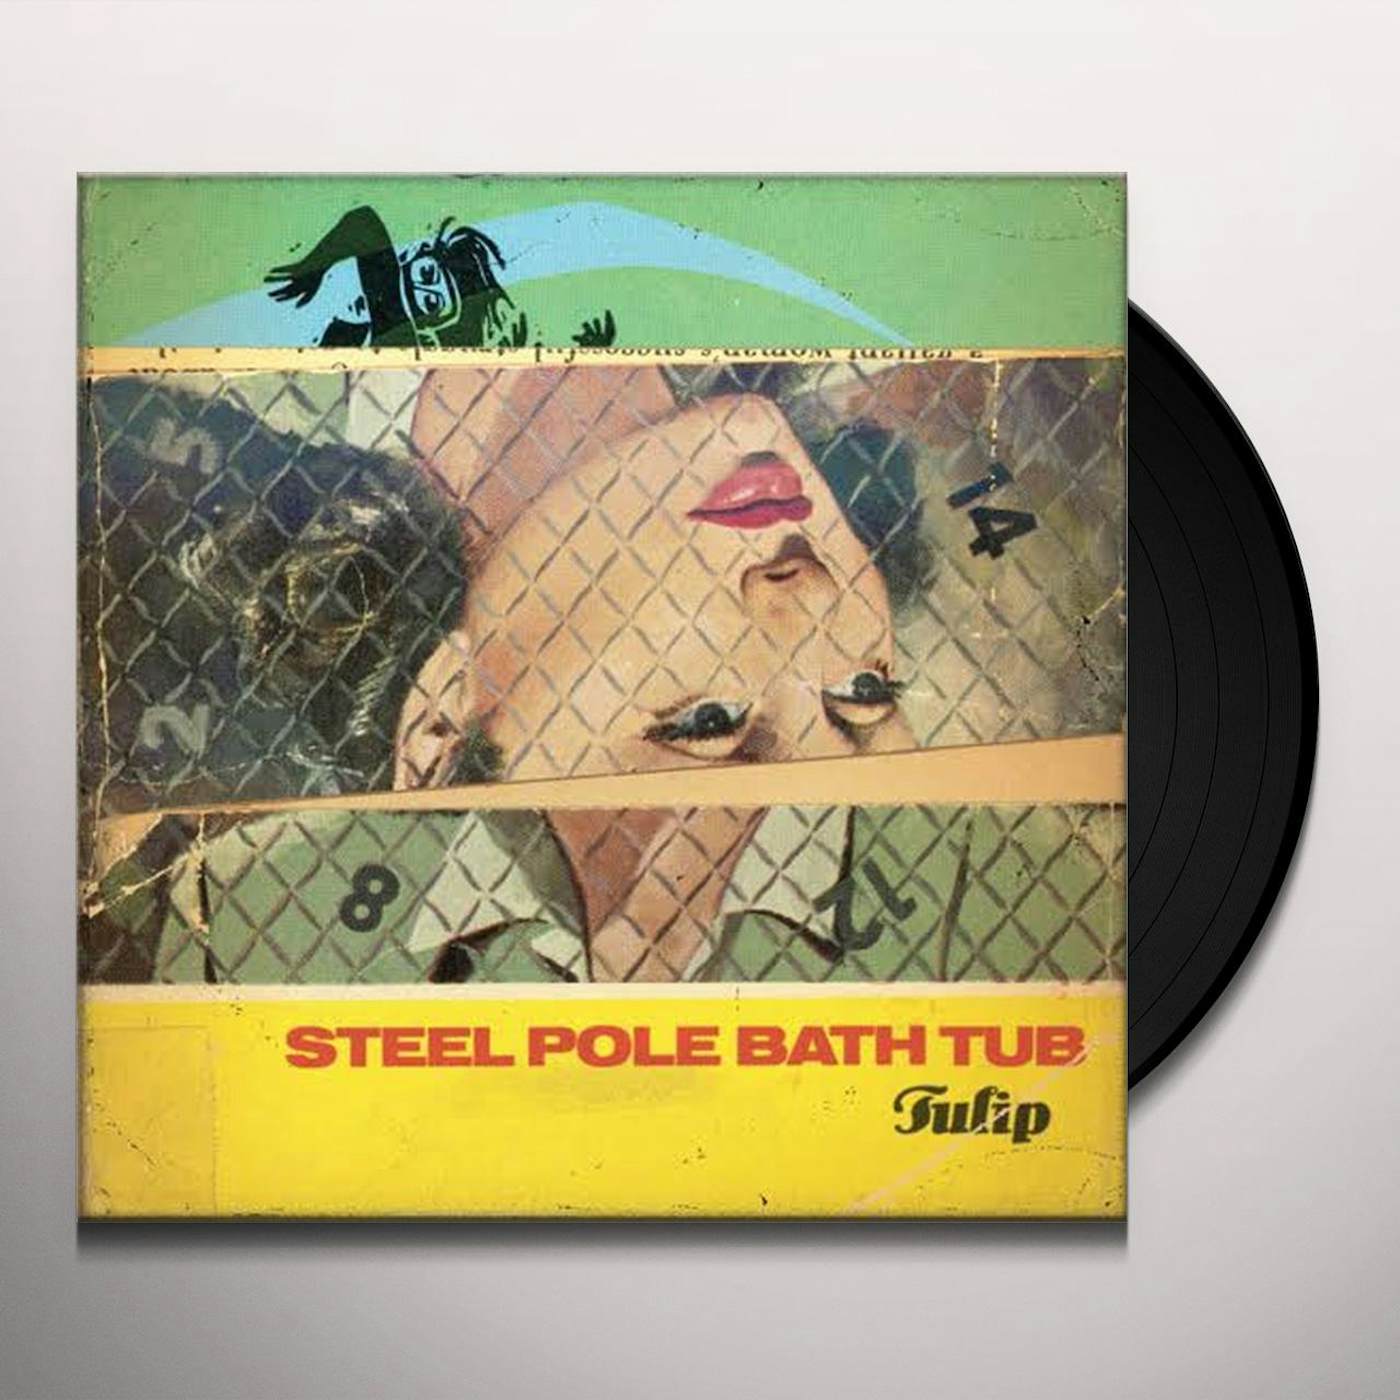 Steel Pole Bath Tub Tulip Vinyl Record